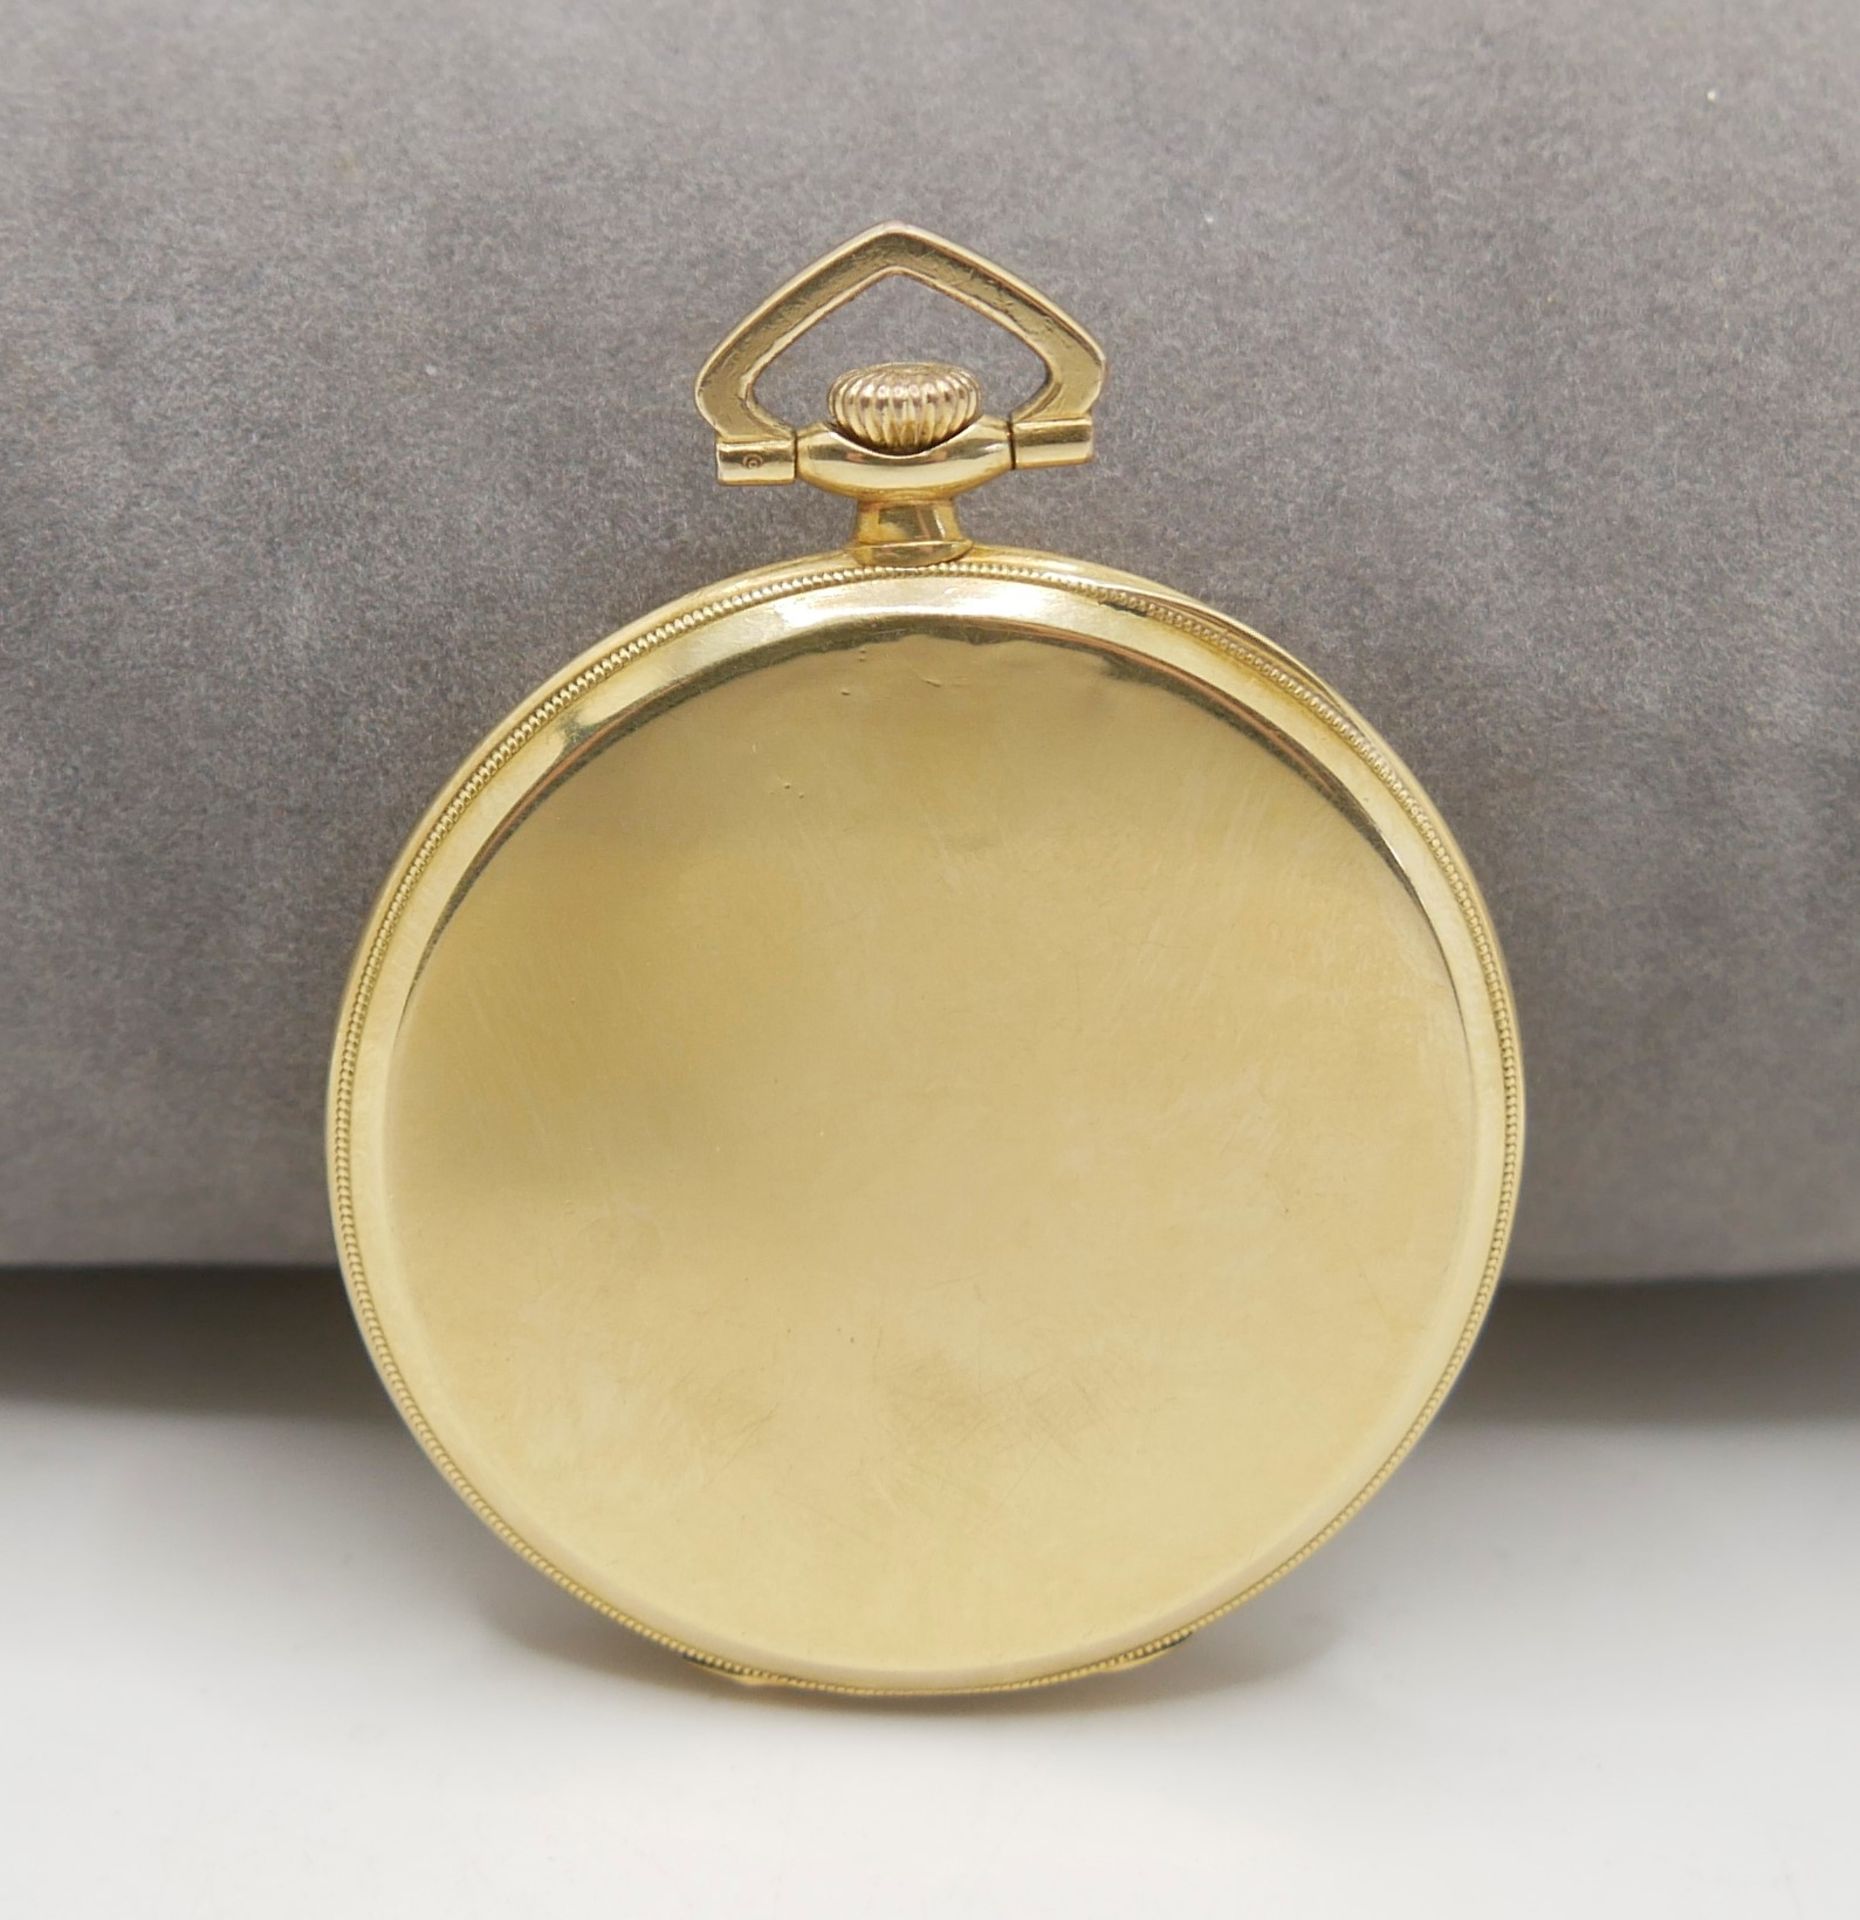 750er Goldene Taschenuhr. Hersteller: Zodiac Chronometre Locle & Genever. Funktion geprüft. - Image 2 of 2